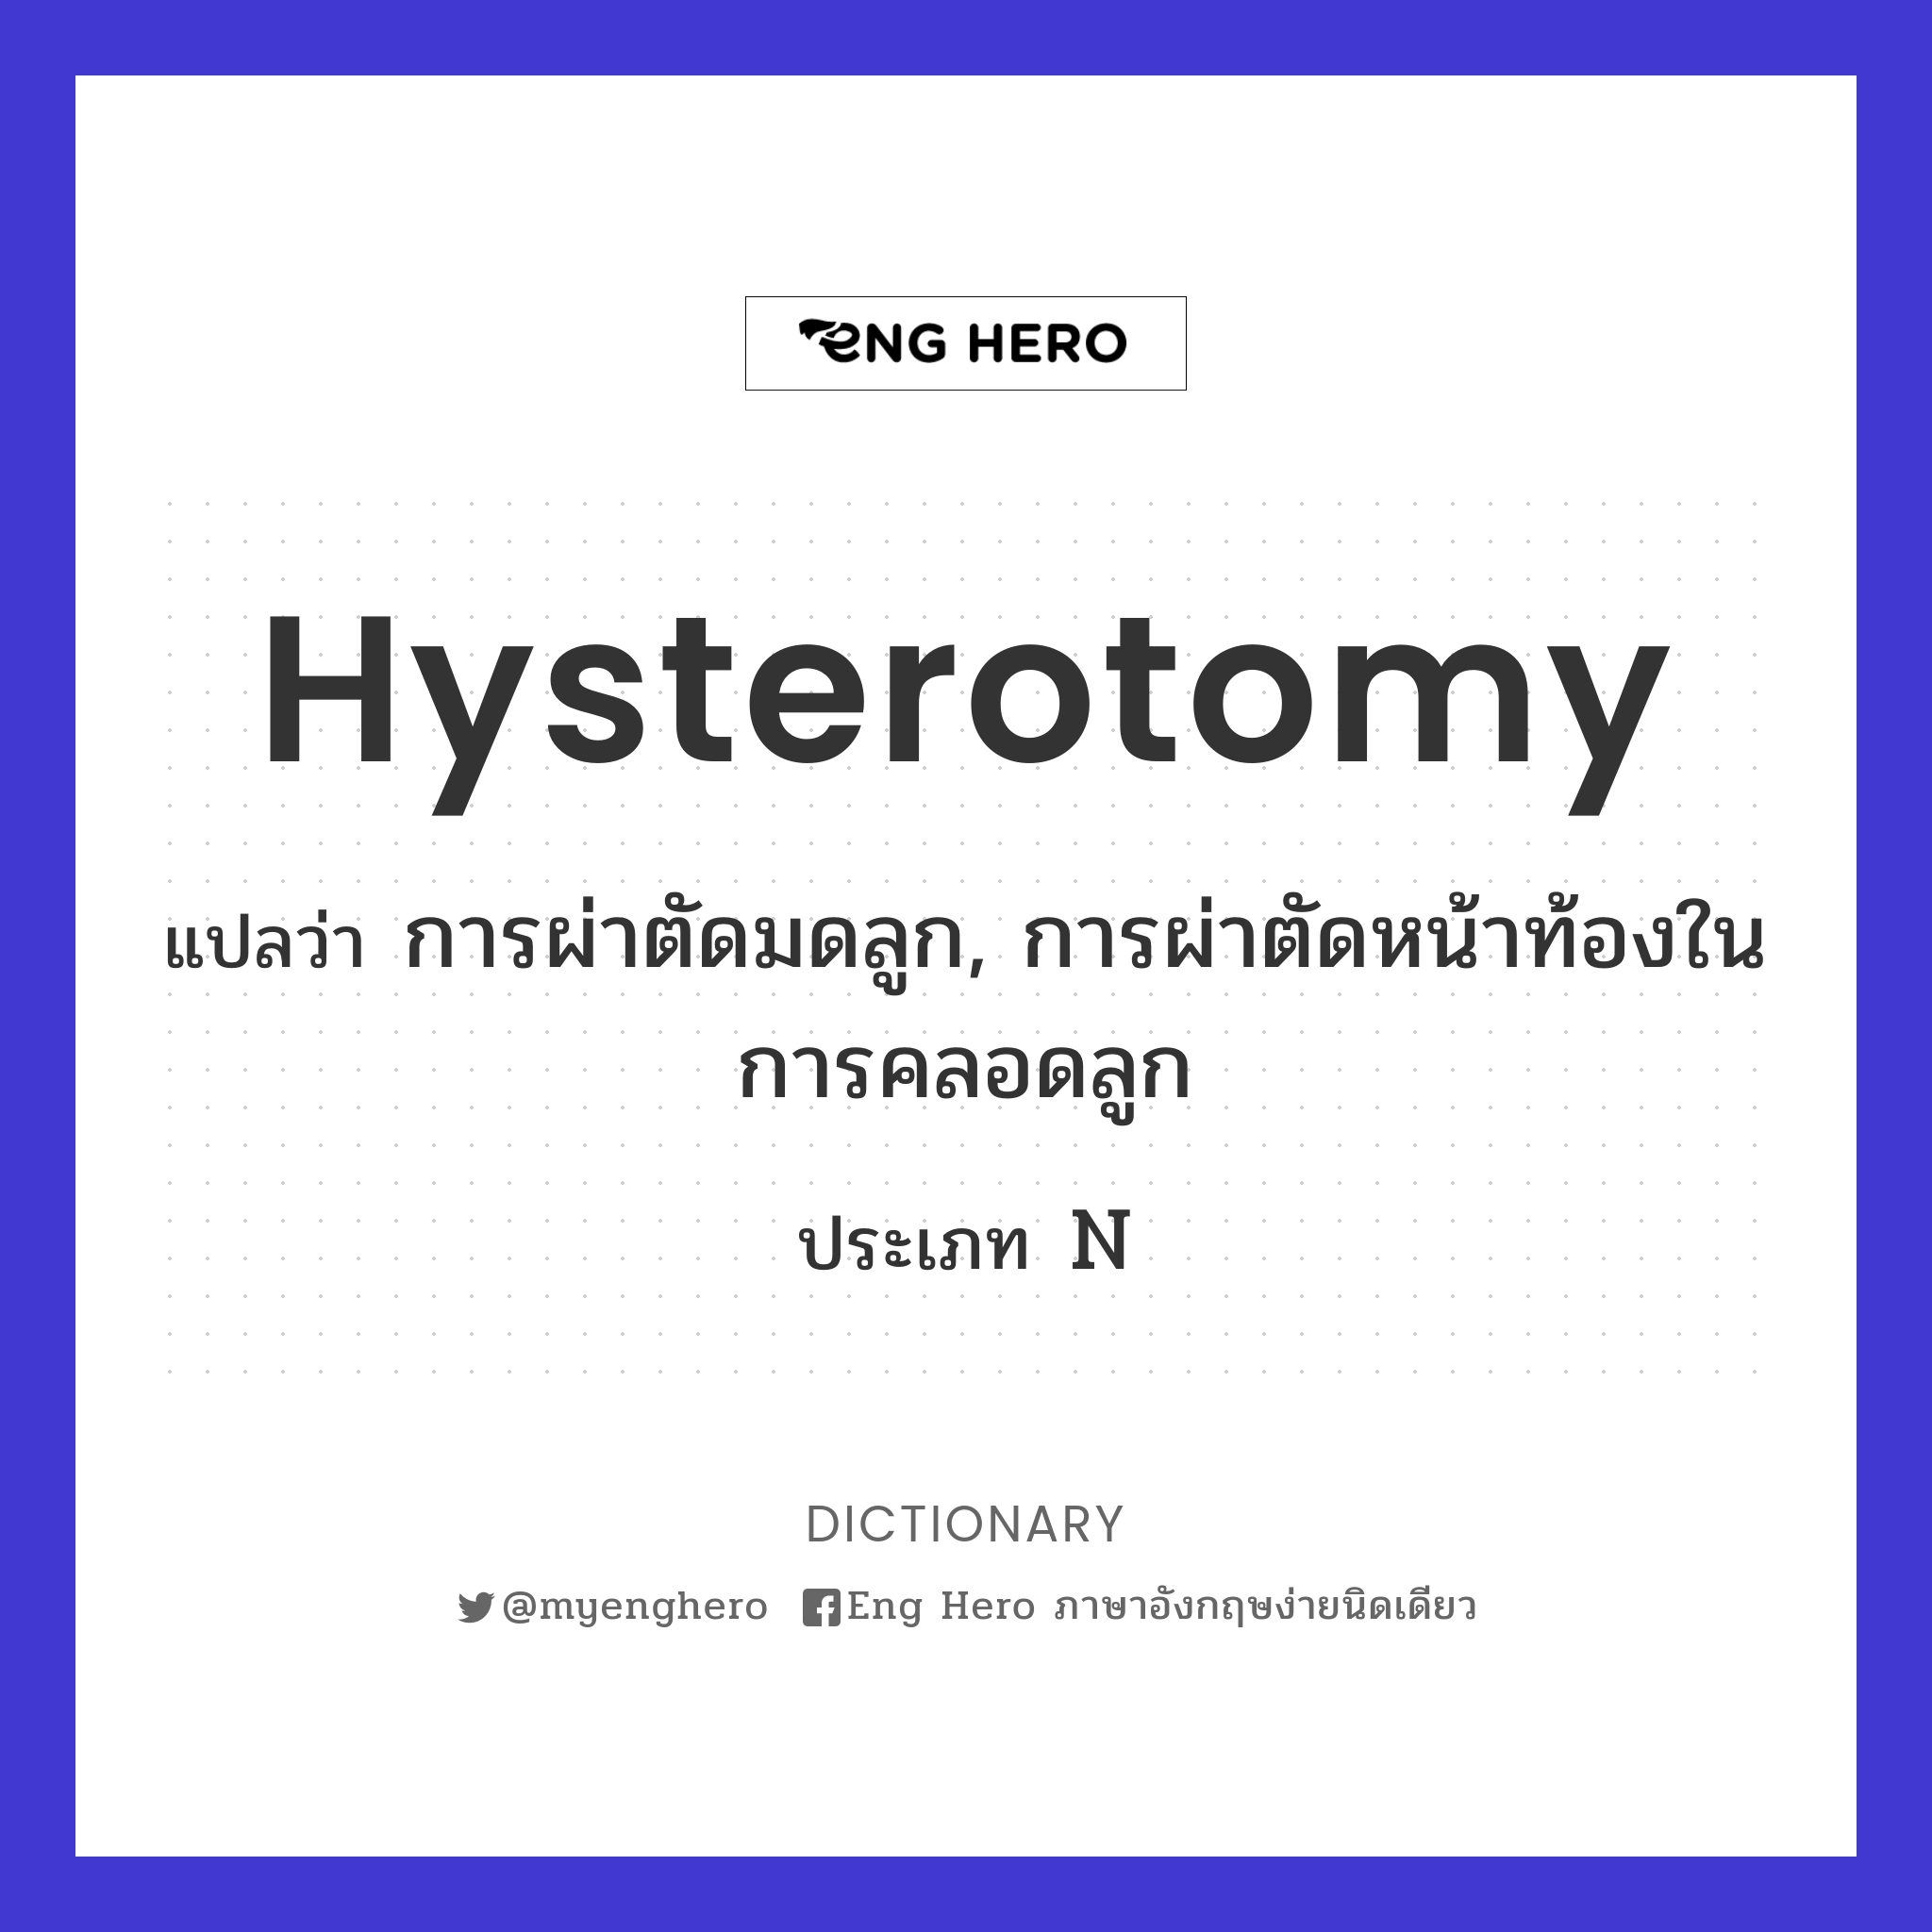 hysterotomy